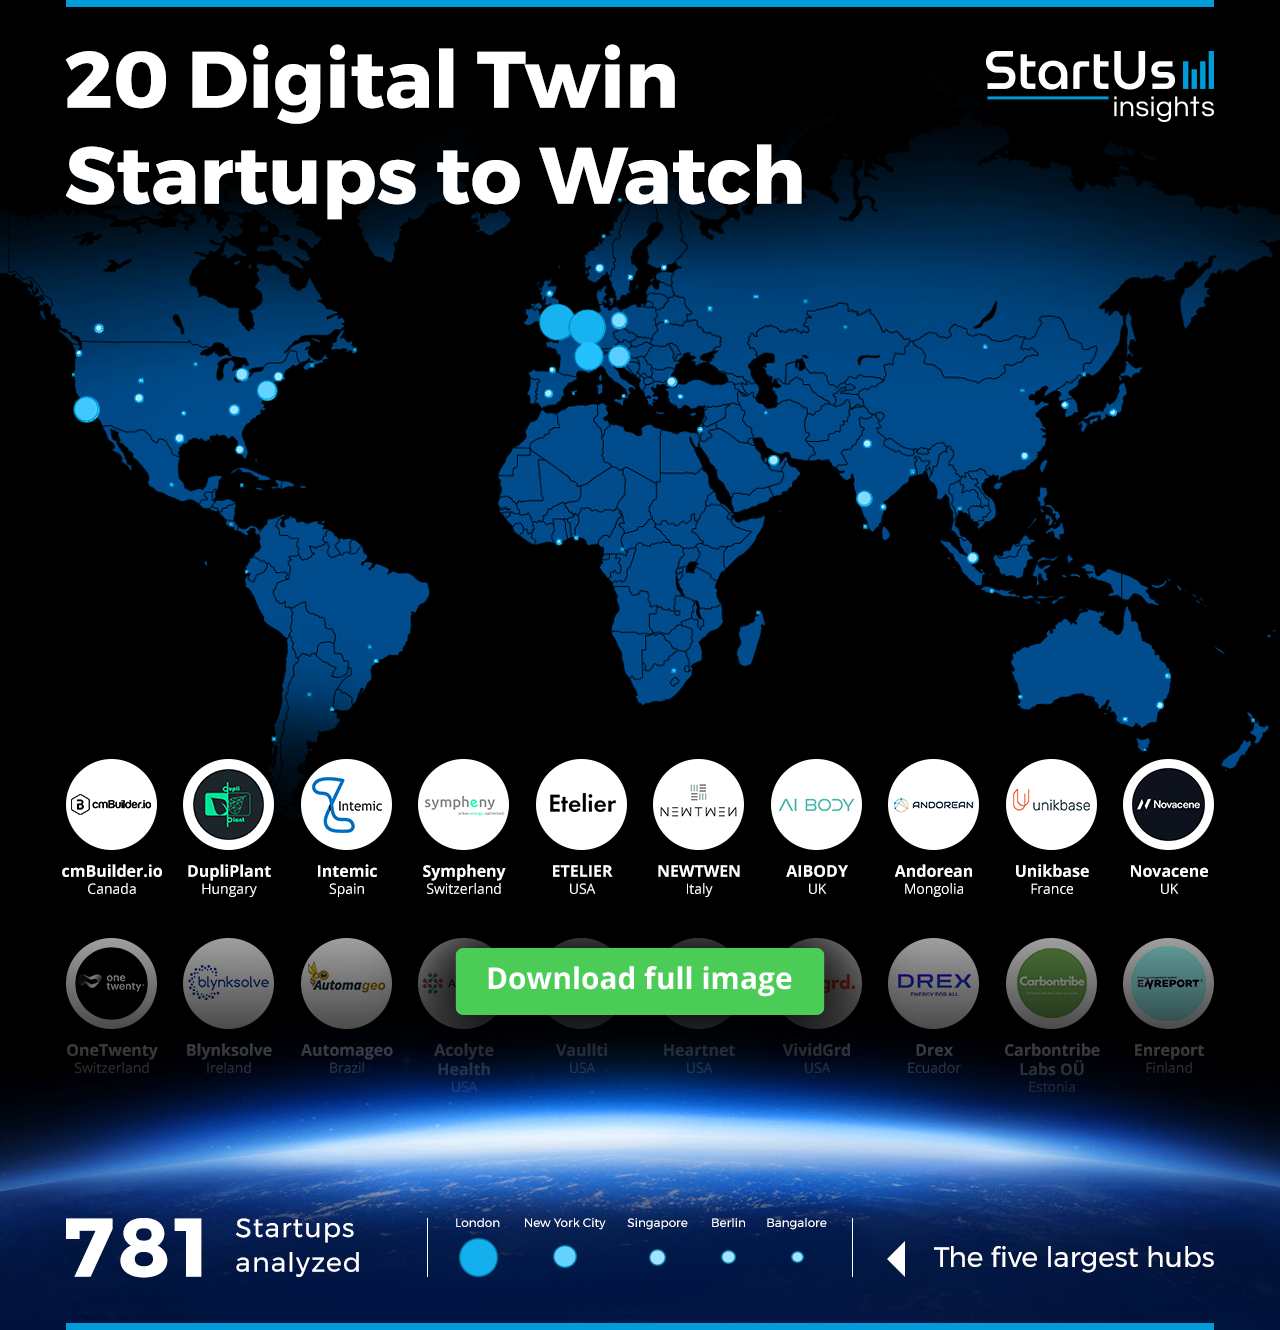 Digital-Twin-Startups-to-Watch-Heat-Map-StartUs-Insights-noresize